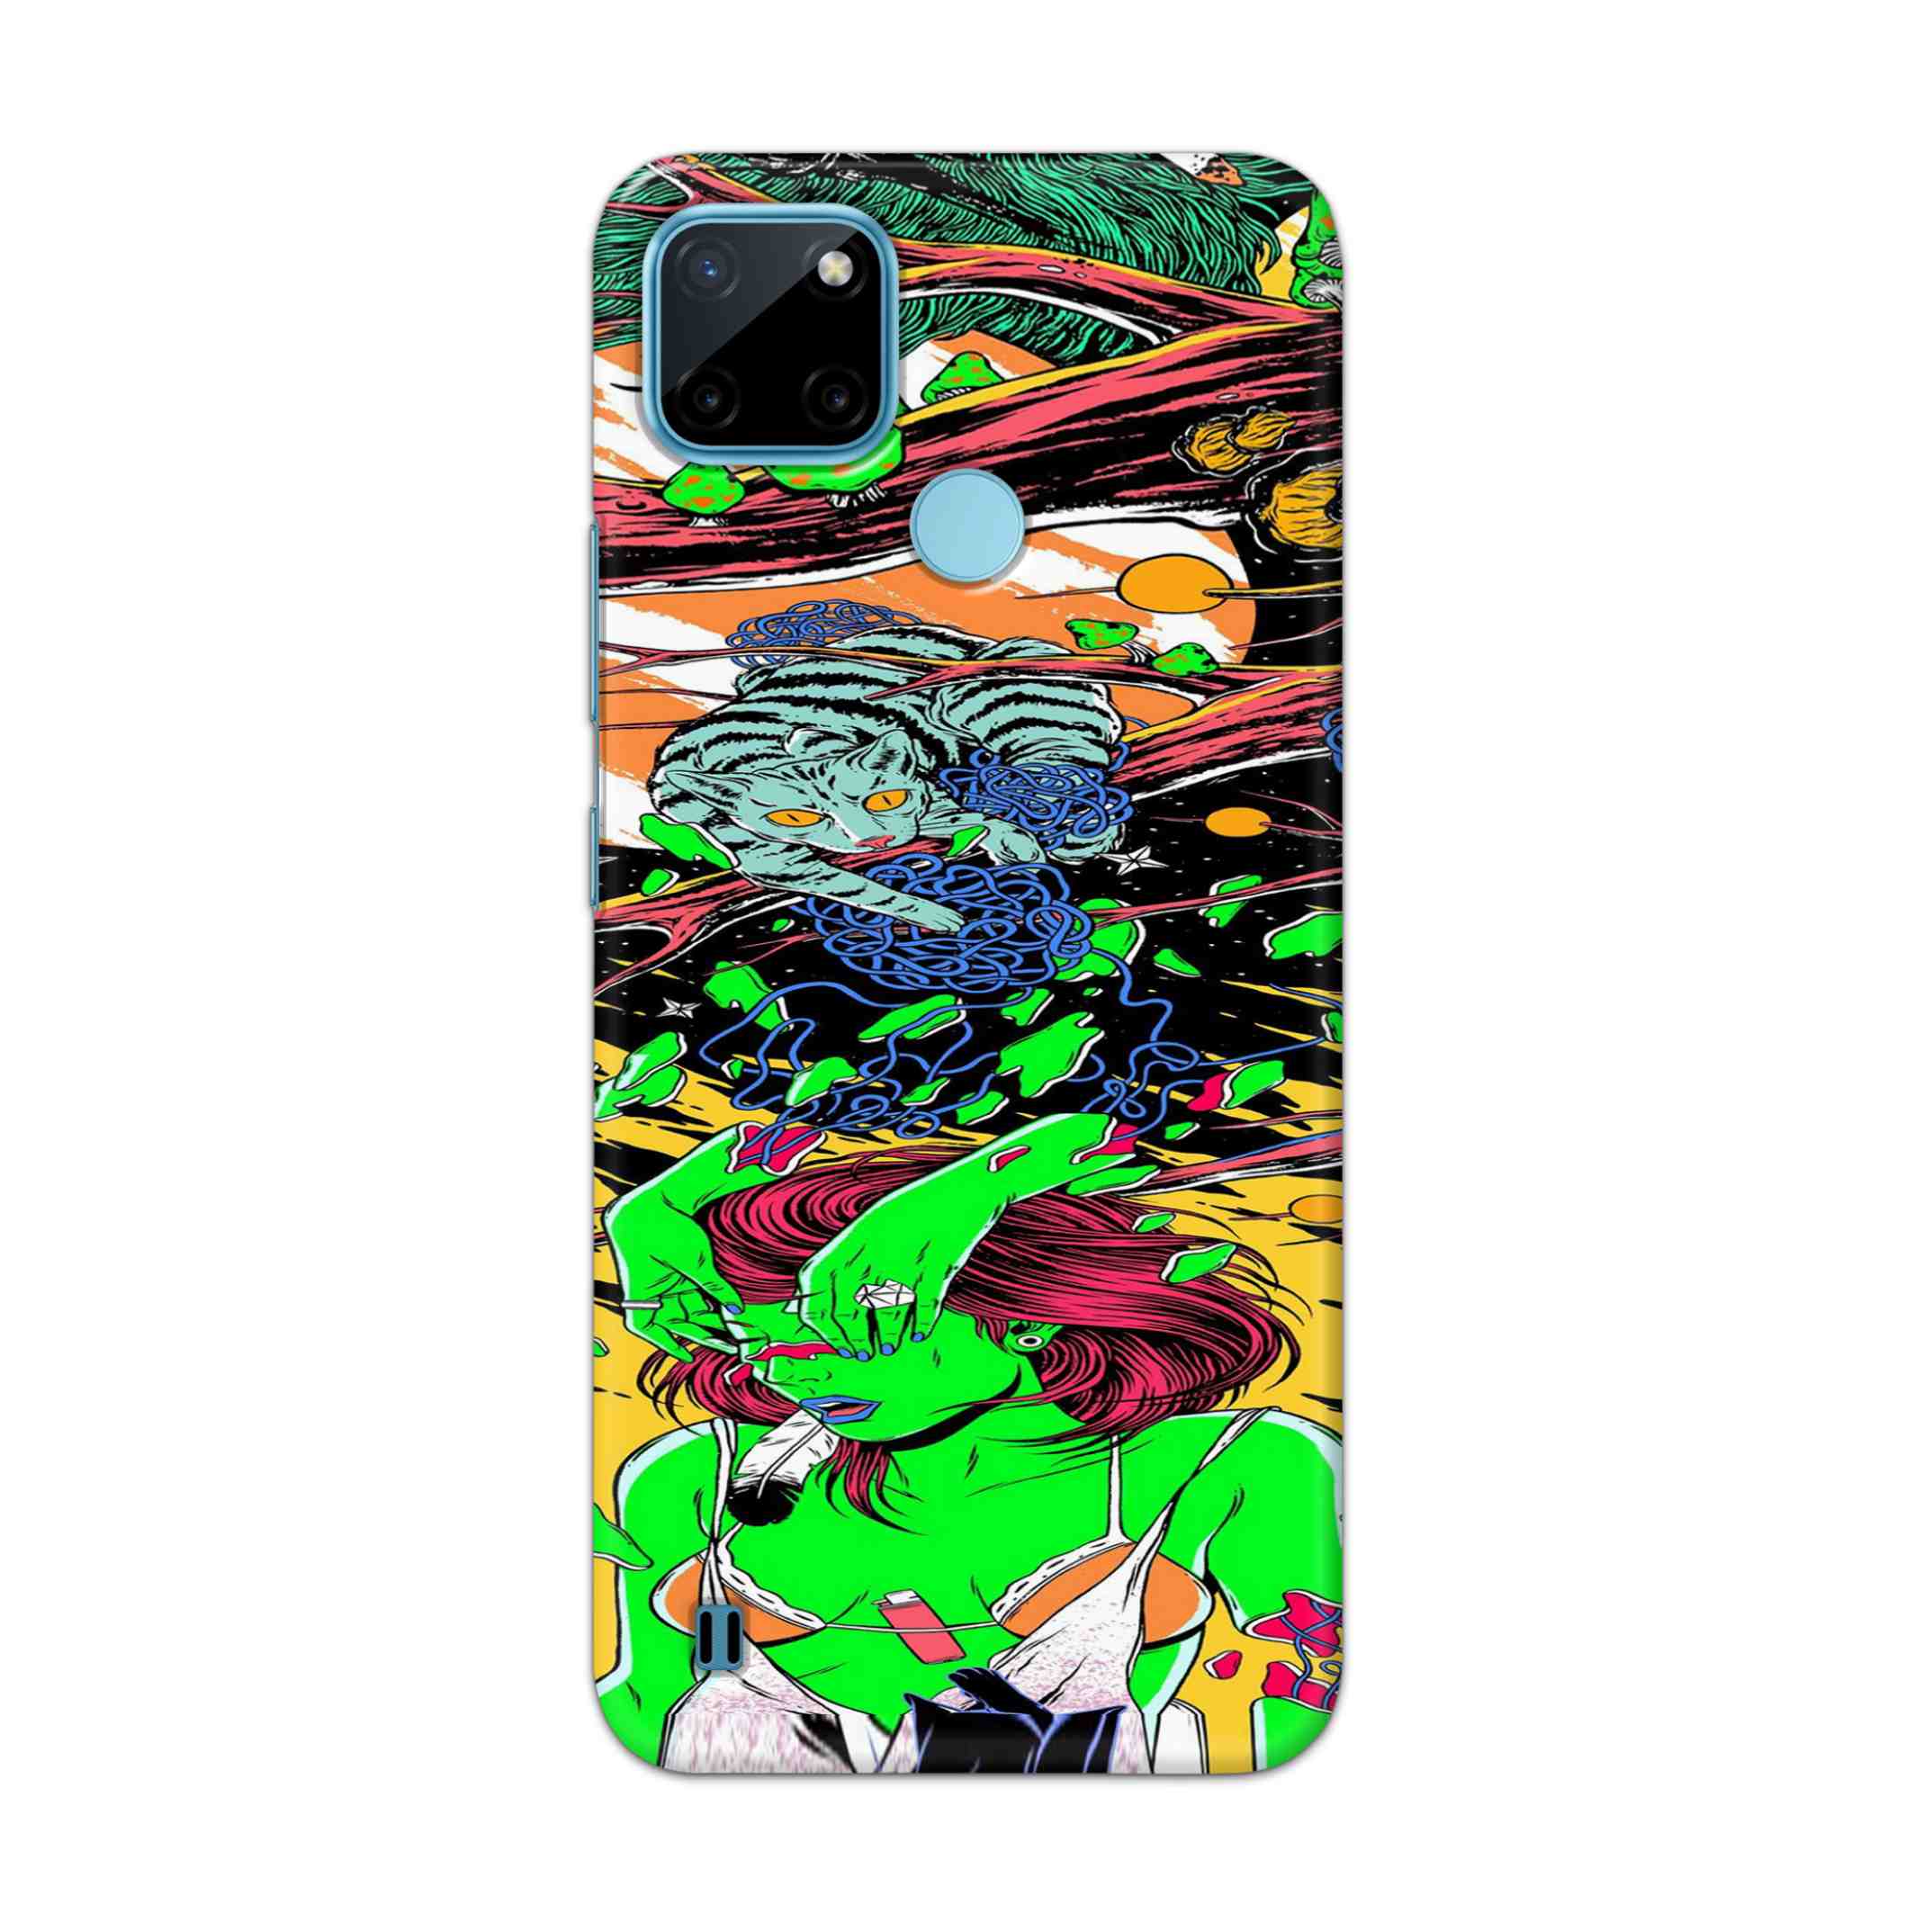 Buy Green Girl Art Hard Back Mobile Phone Case Cover For Realme C21Y Online